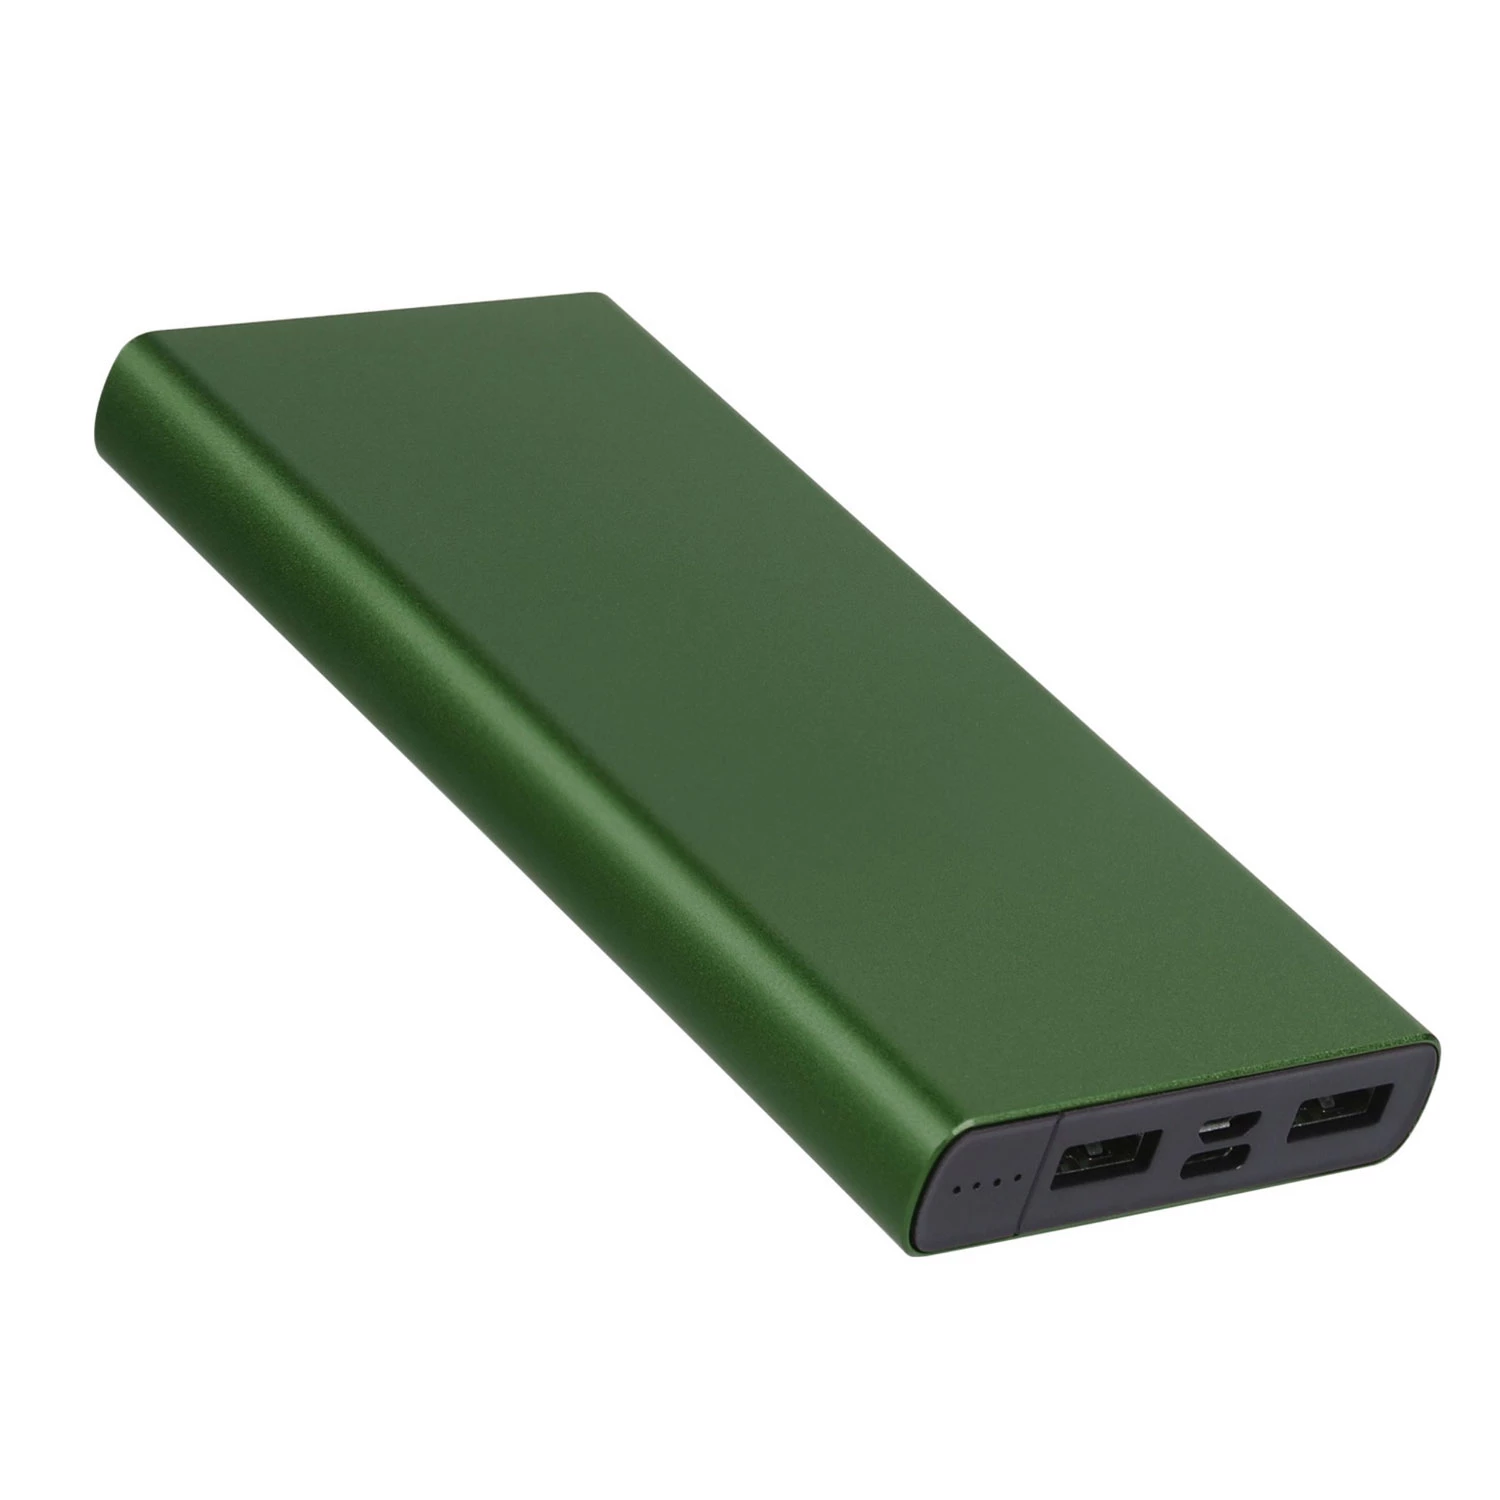 20,000mAh Power Bank Portable External Battery Charger Dual USB Type C Micro USB Input